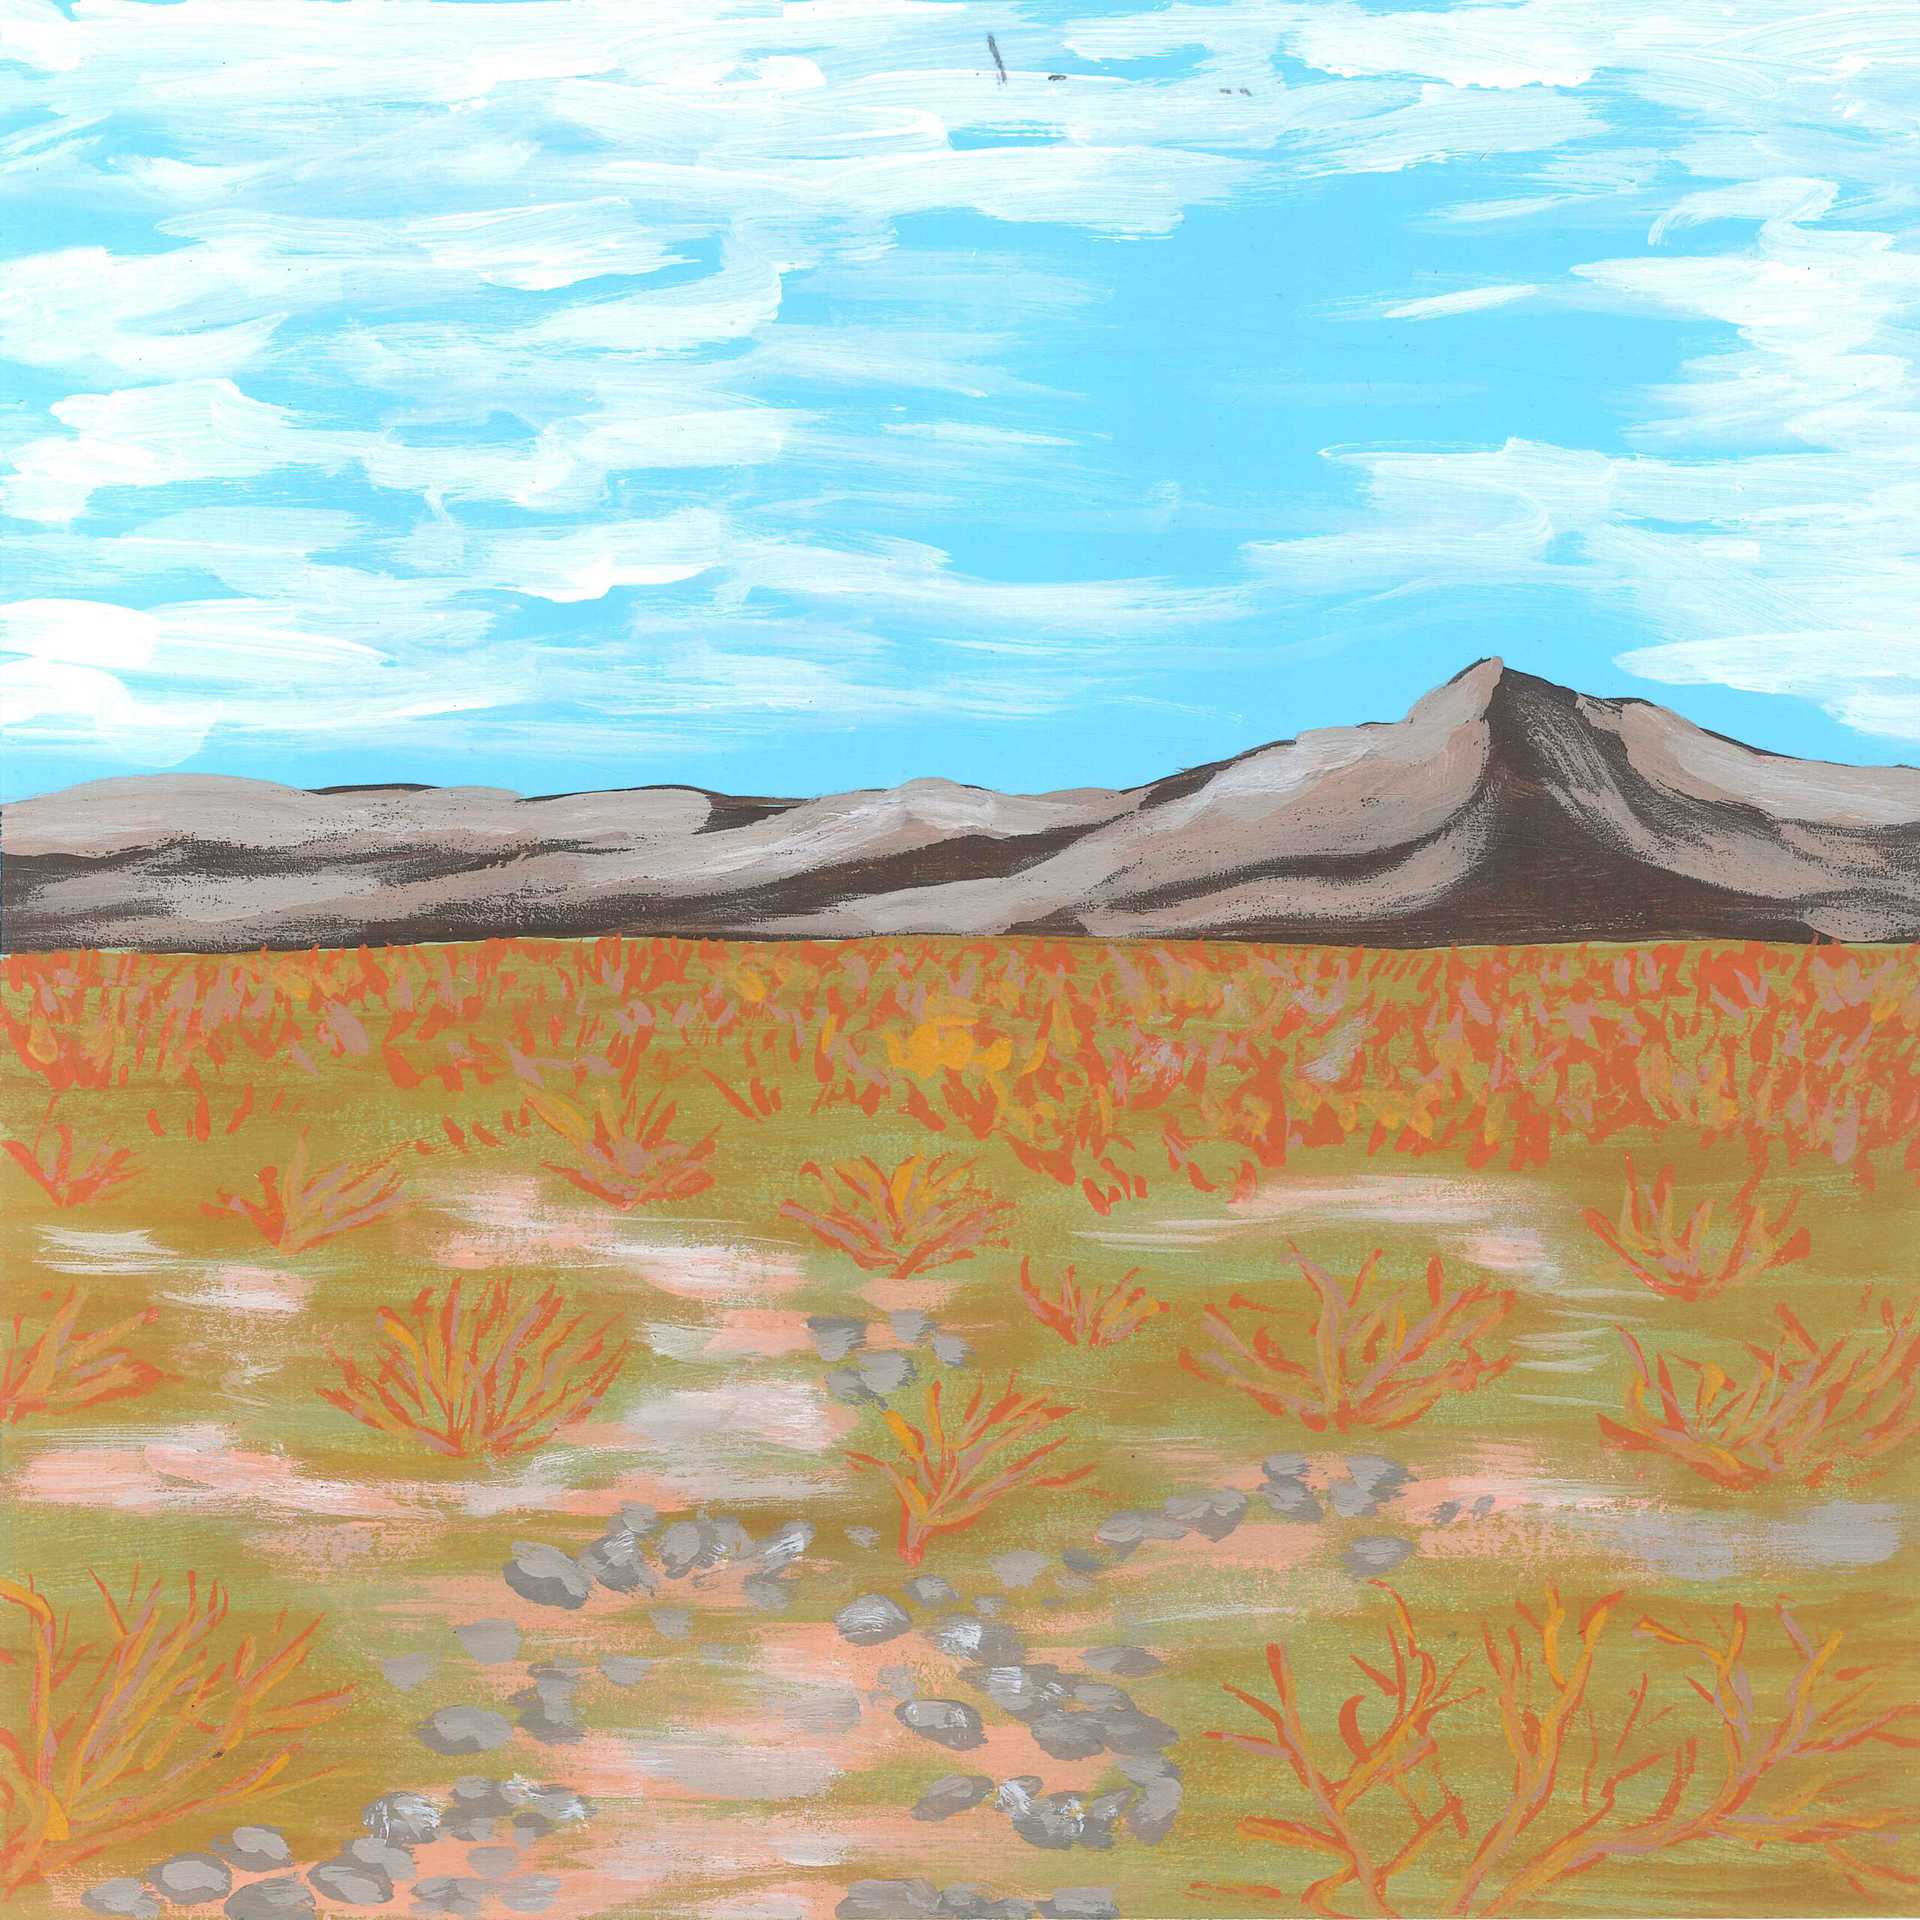 Massive Thunderstorm in the Atacama Desert - nature landscape painting - earth.fm